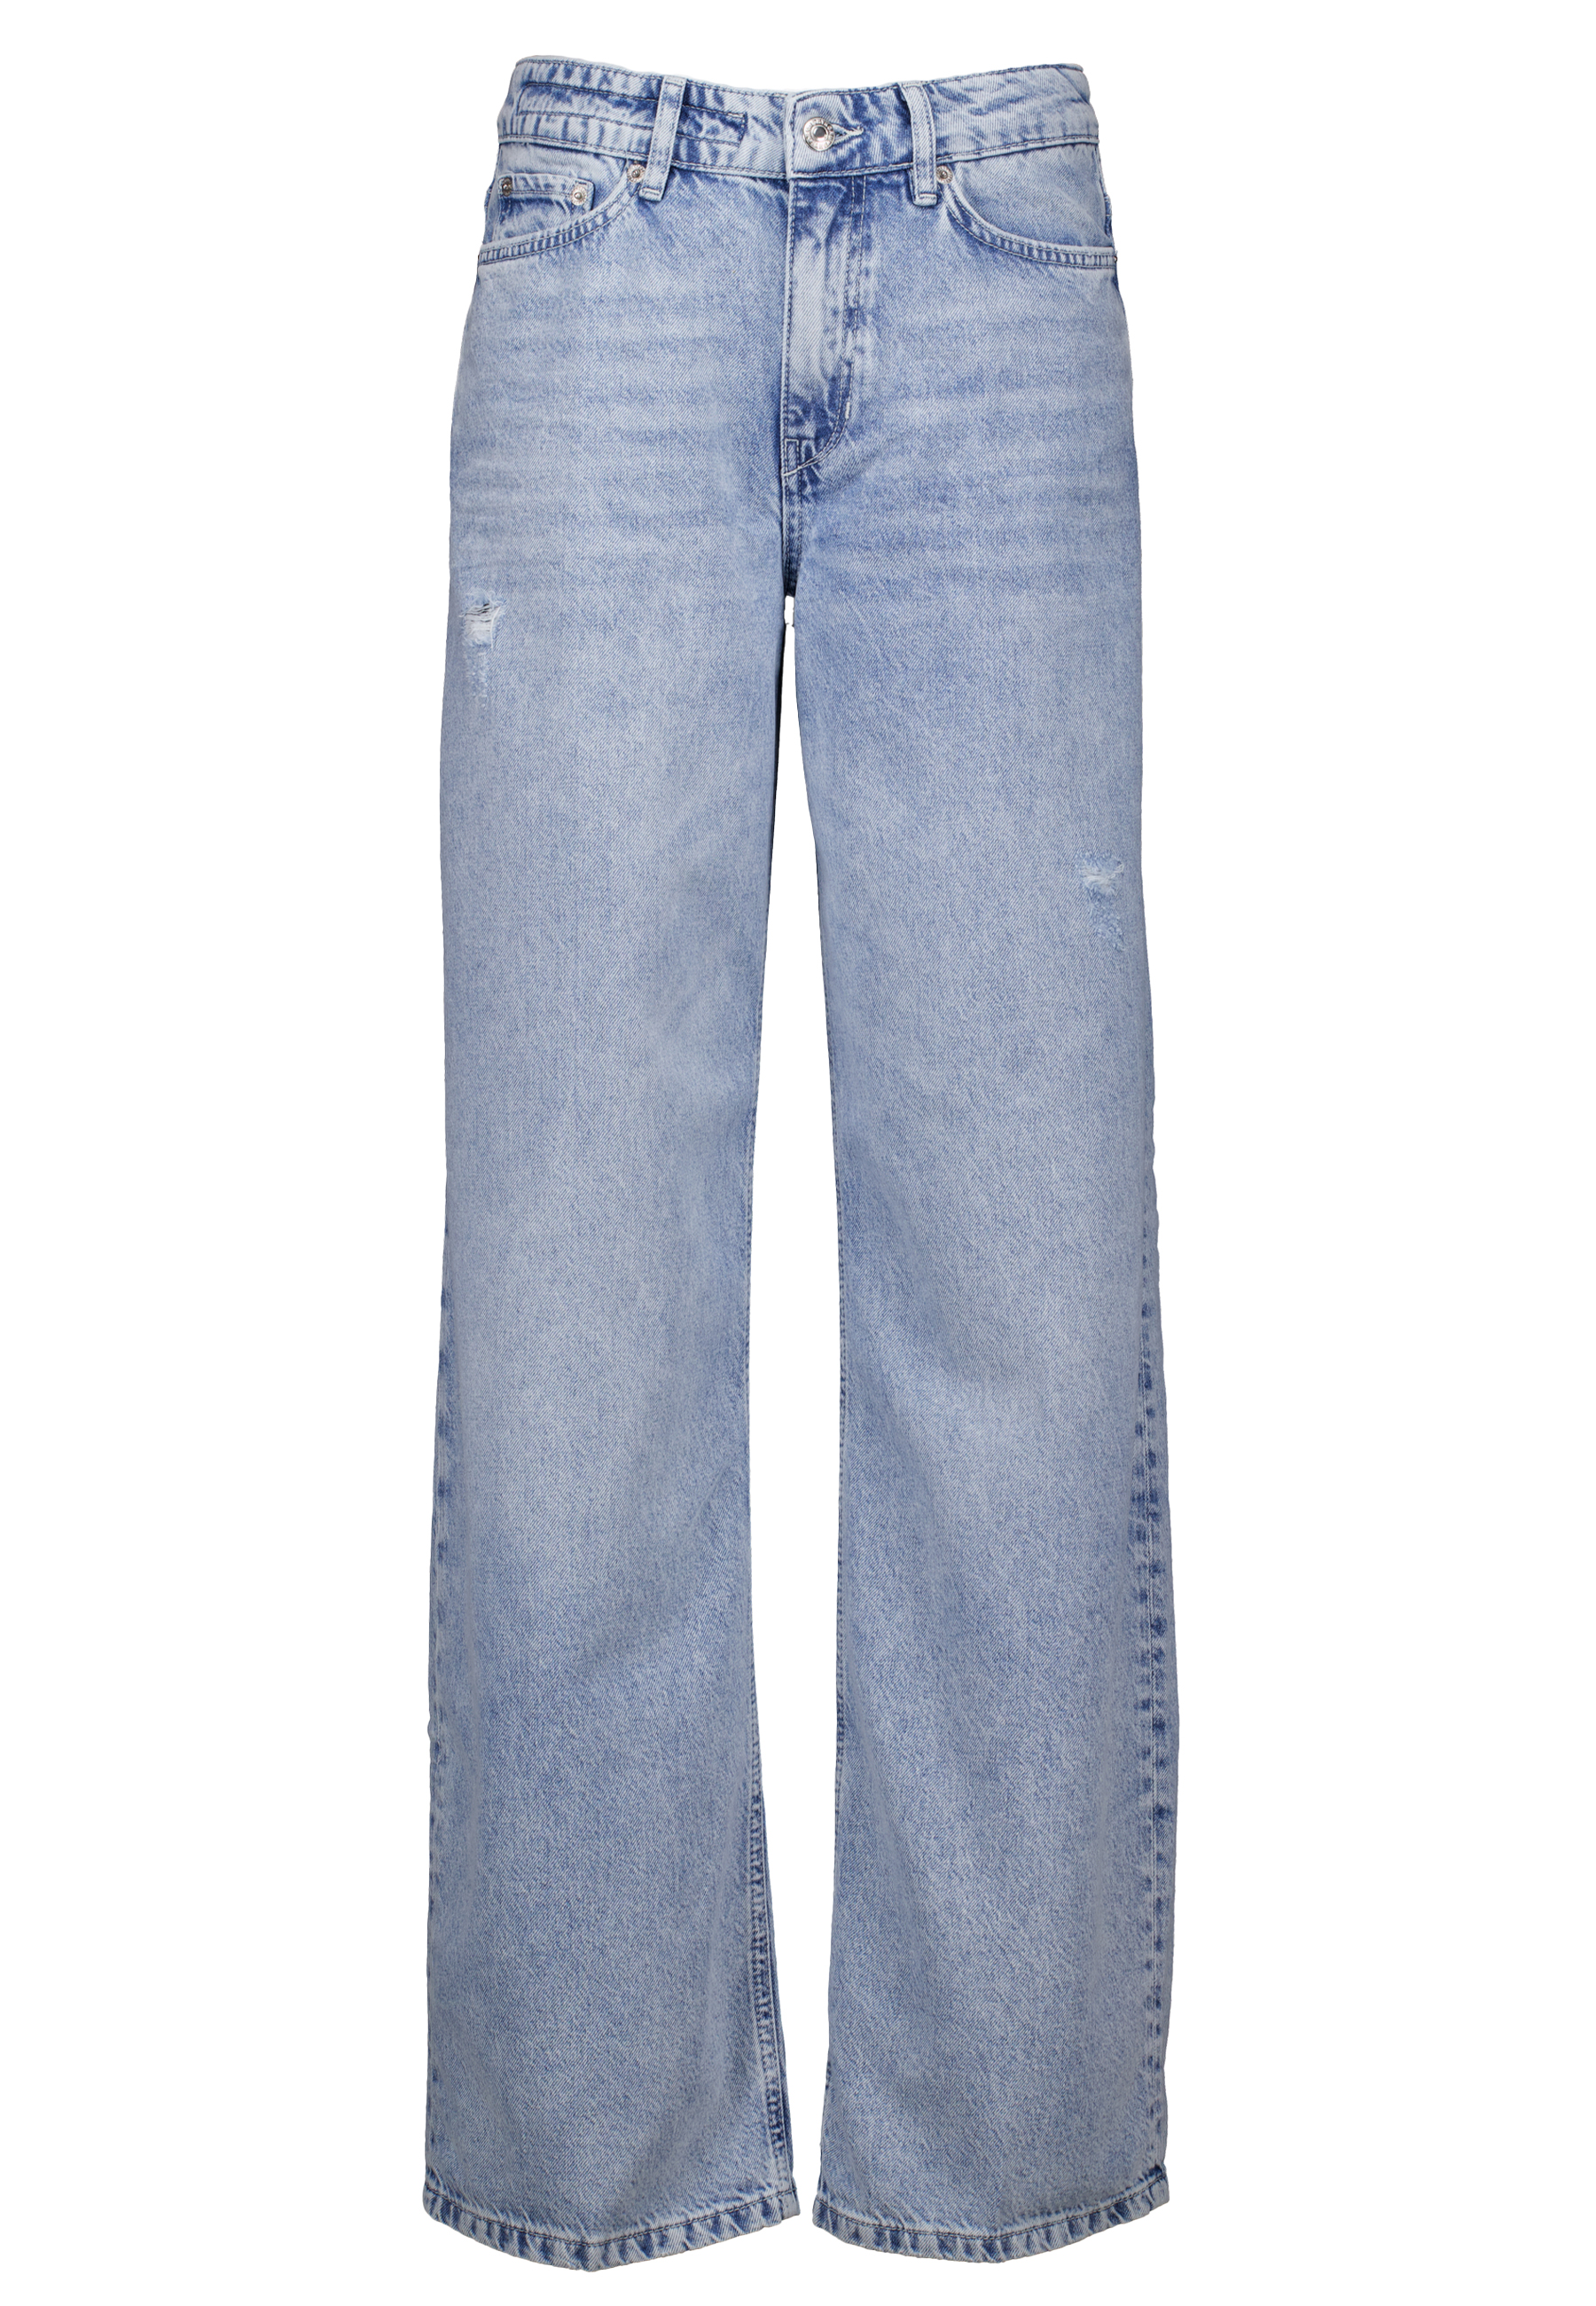 Jeans Blauw Medley jeans blauw